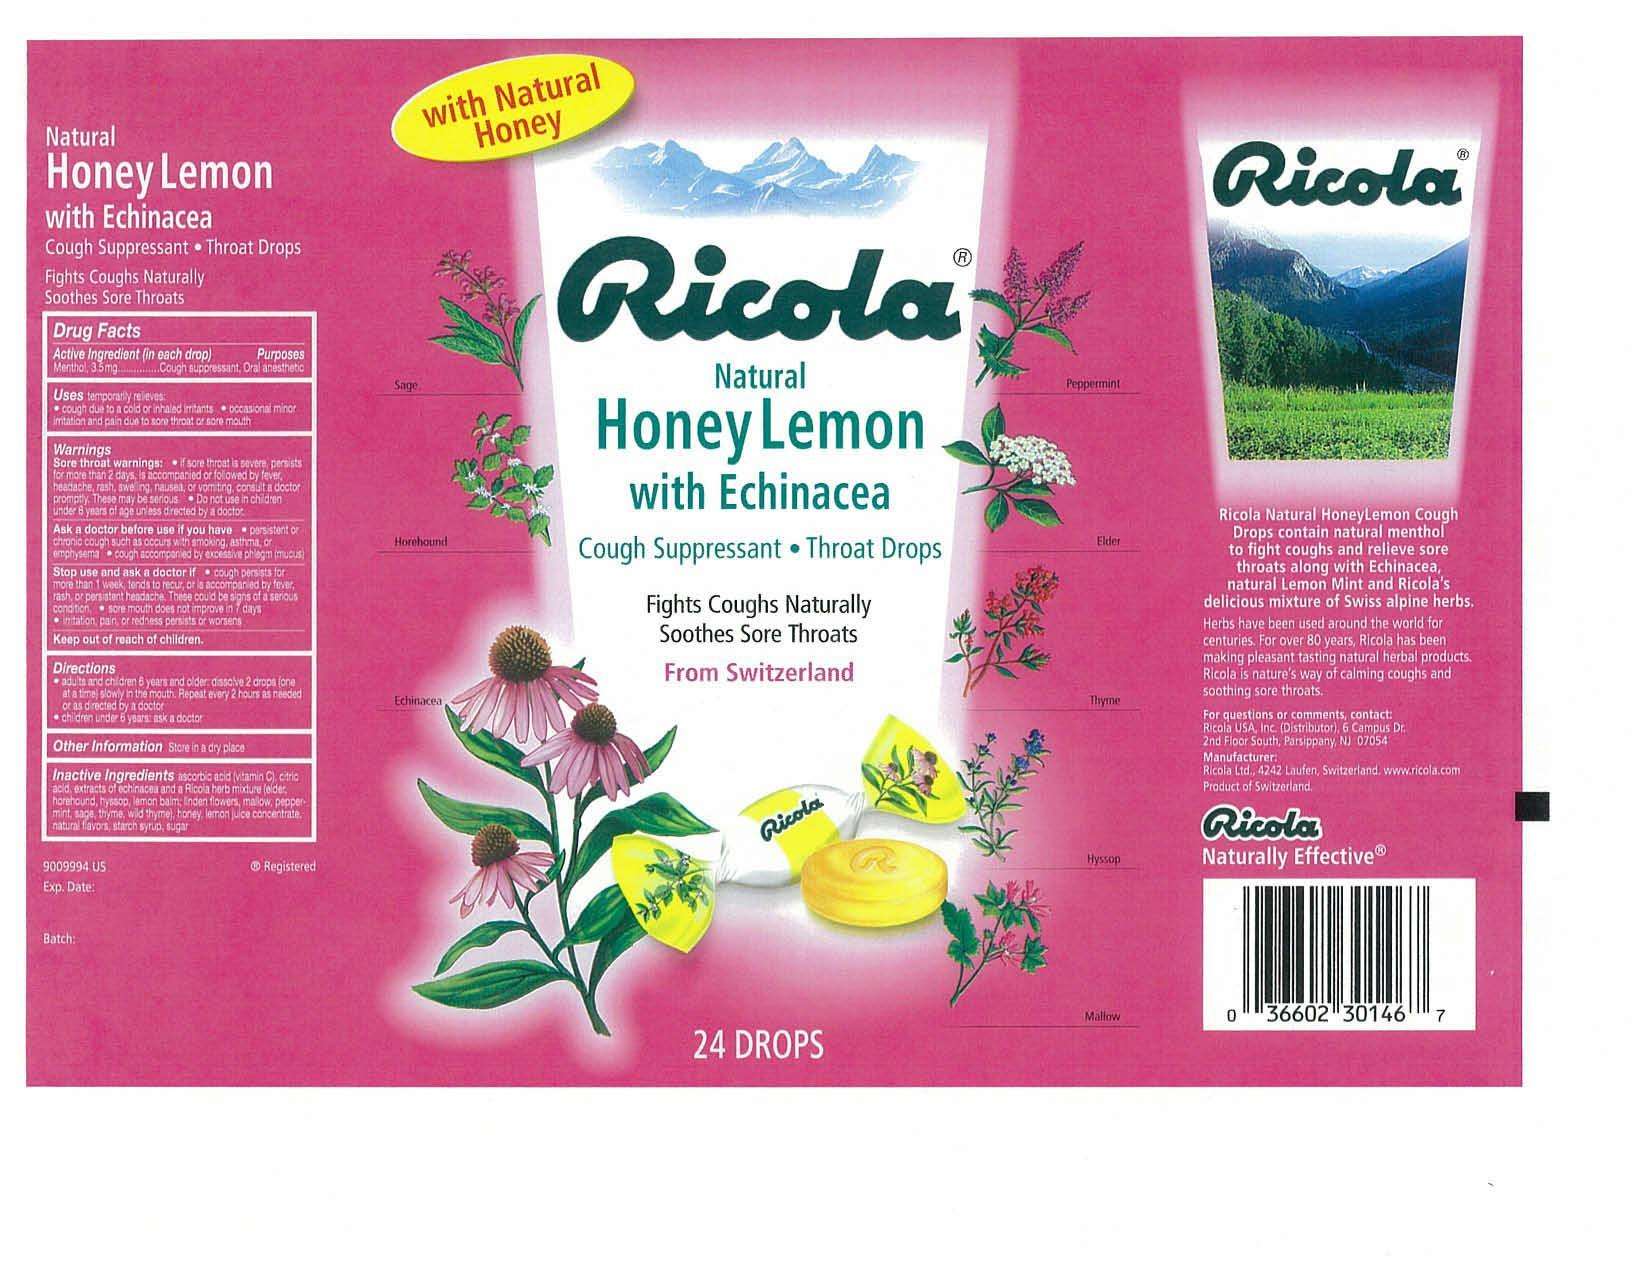 Natural Honey Lemon with Echinacea Cough Suppressant Throat Drops